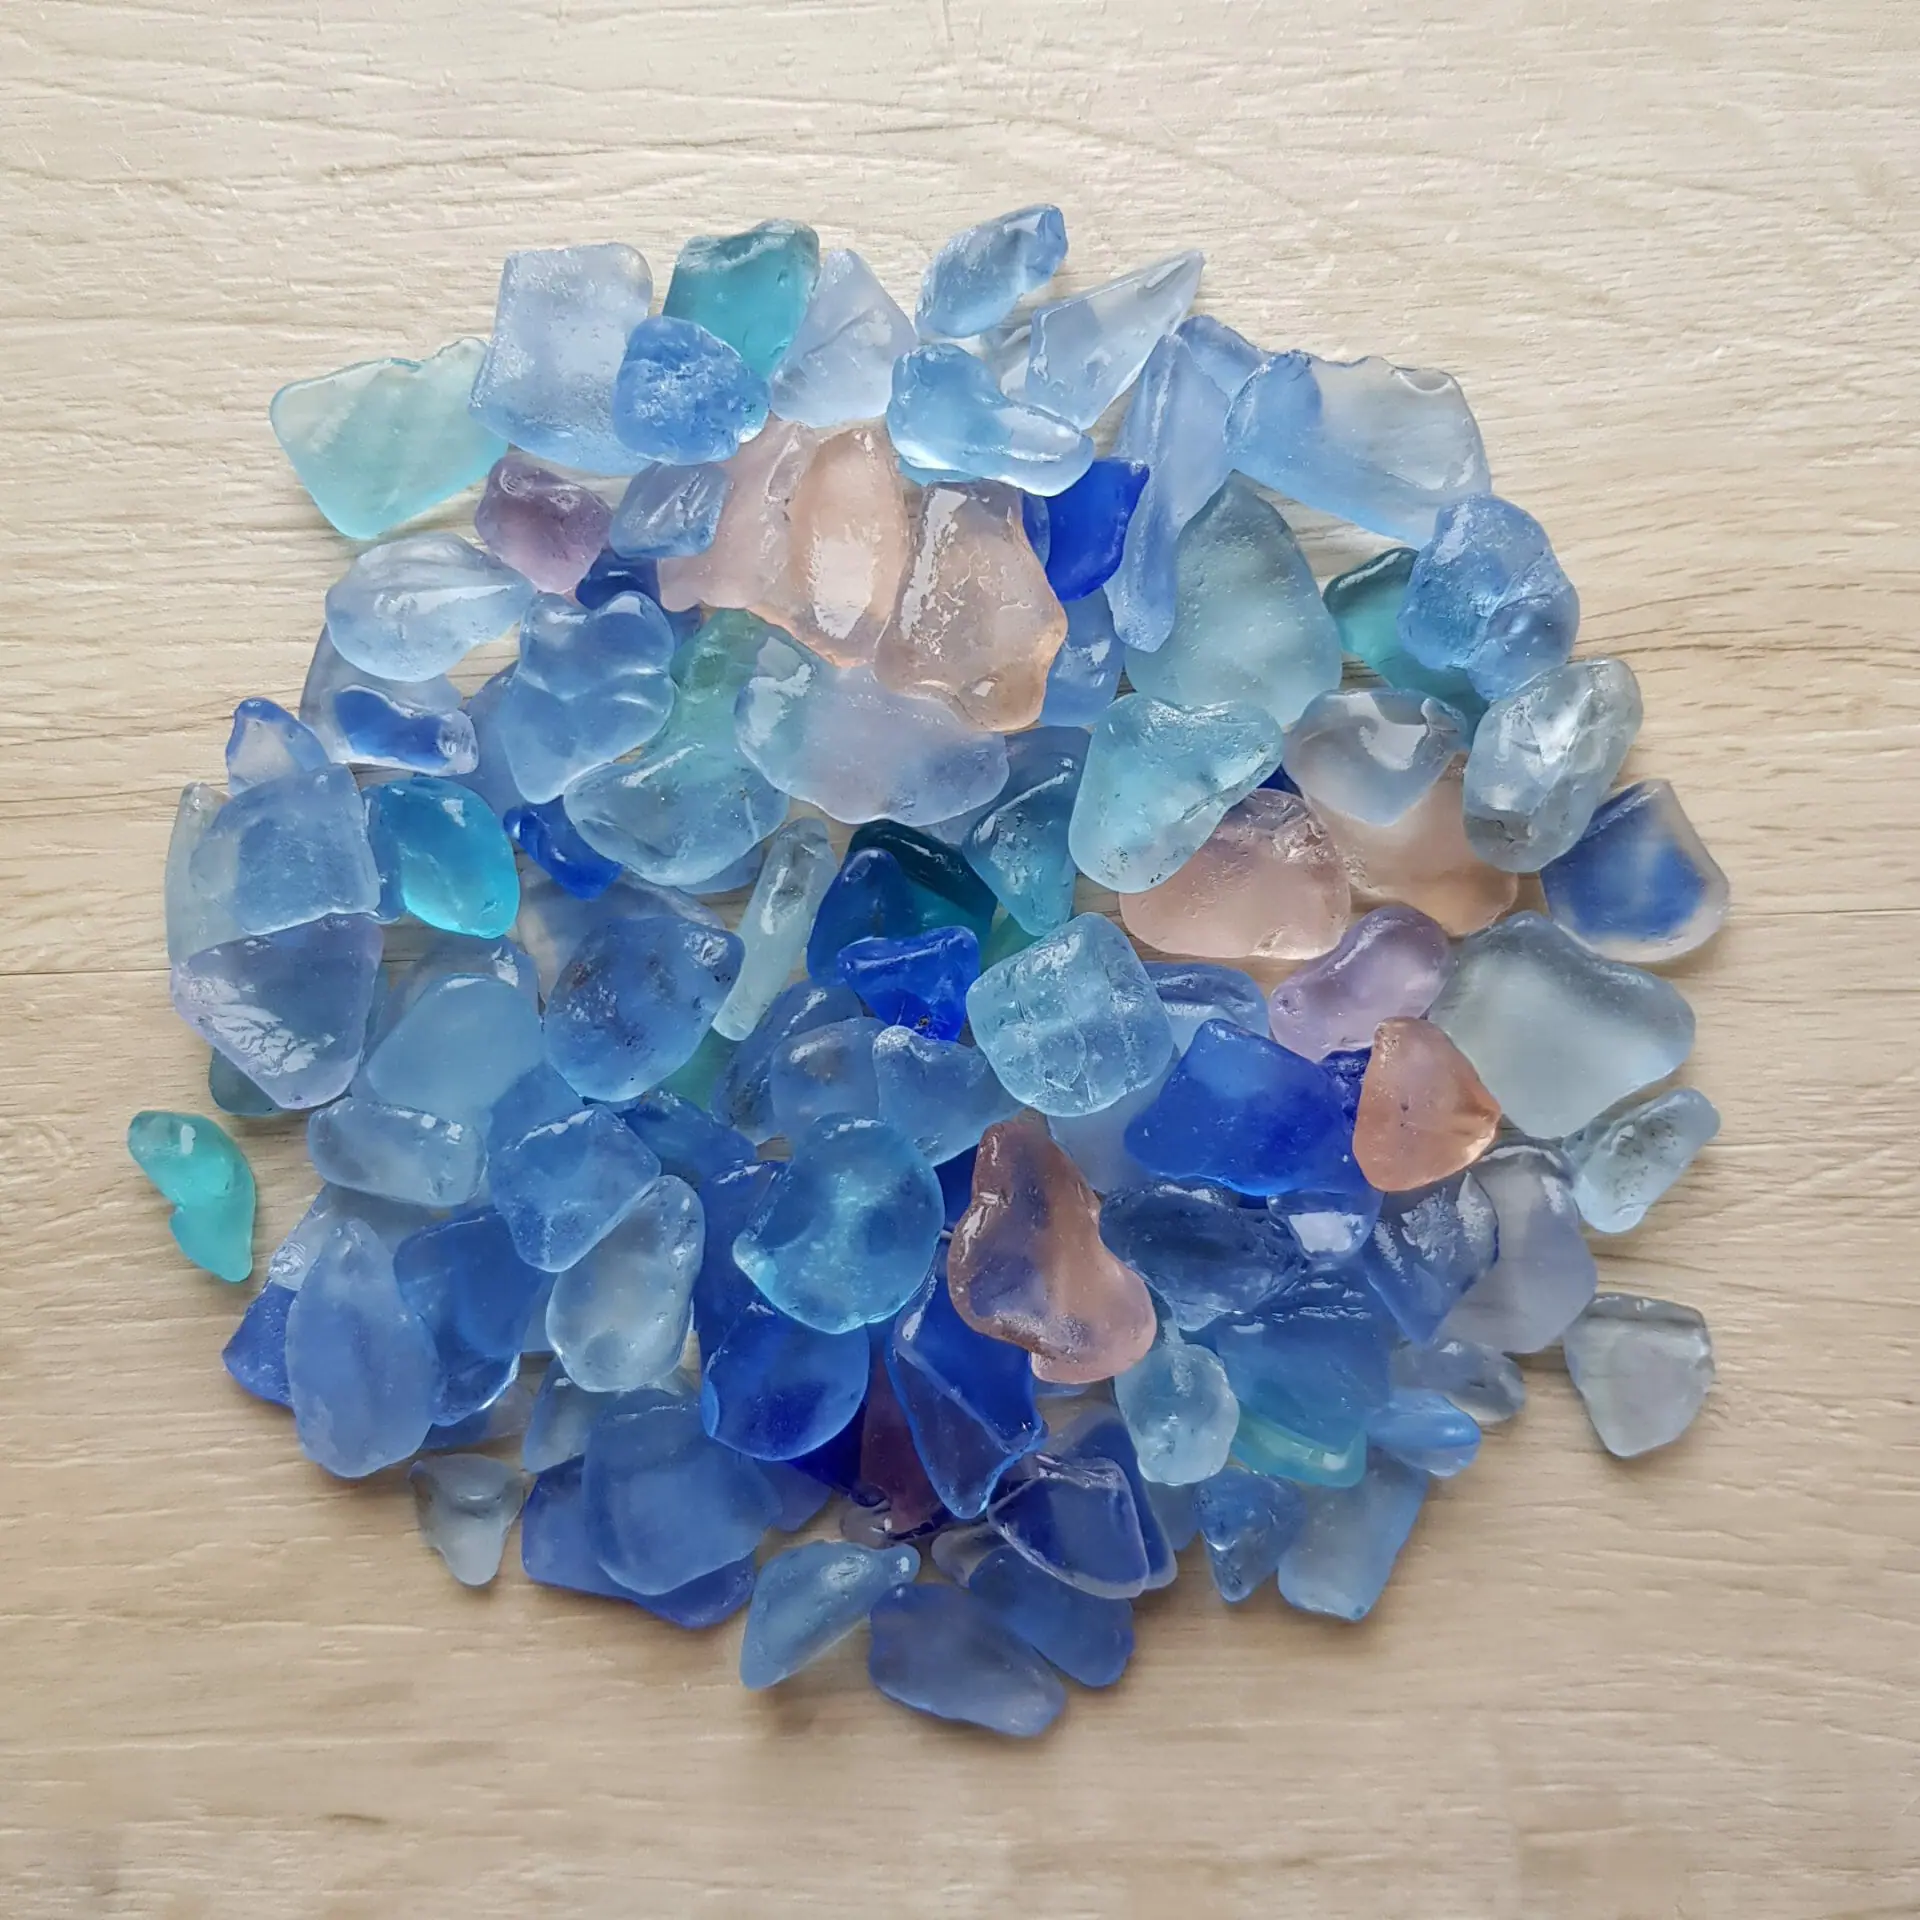 Rare sea glass Colorful beach glass 1/2 pound